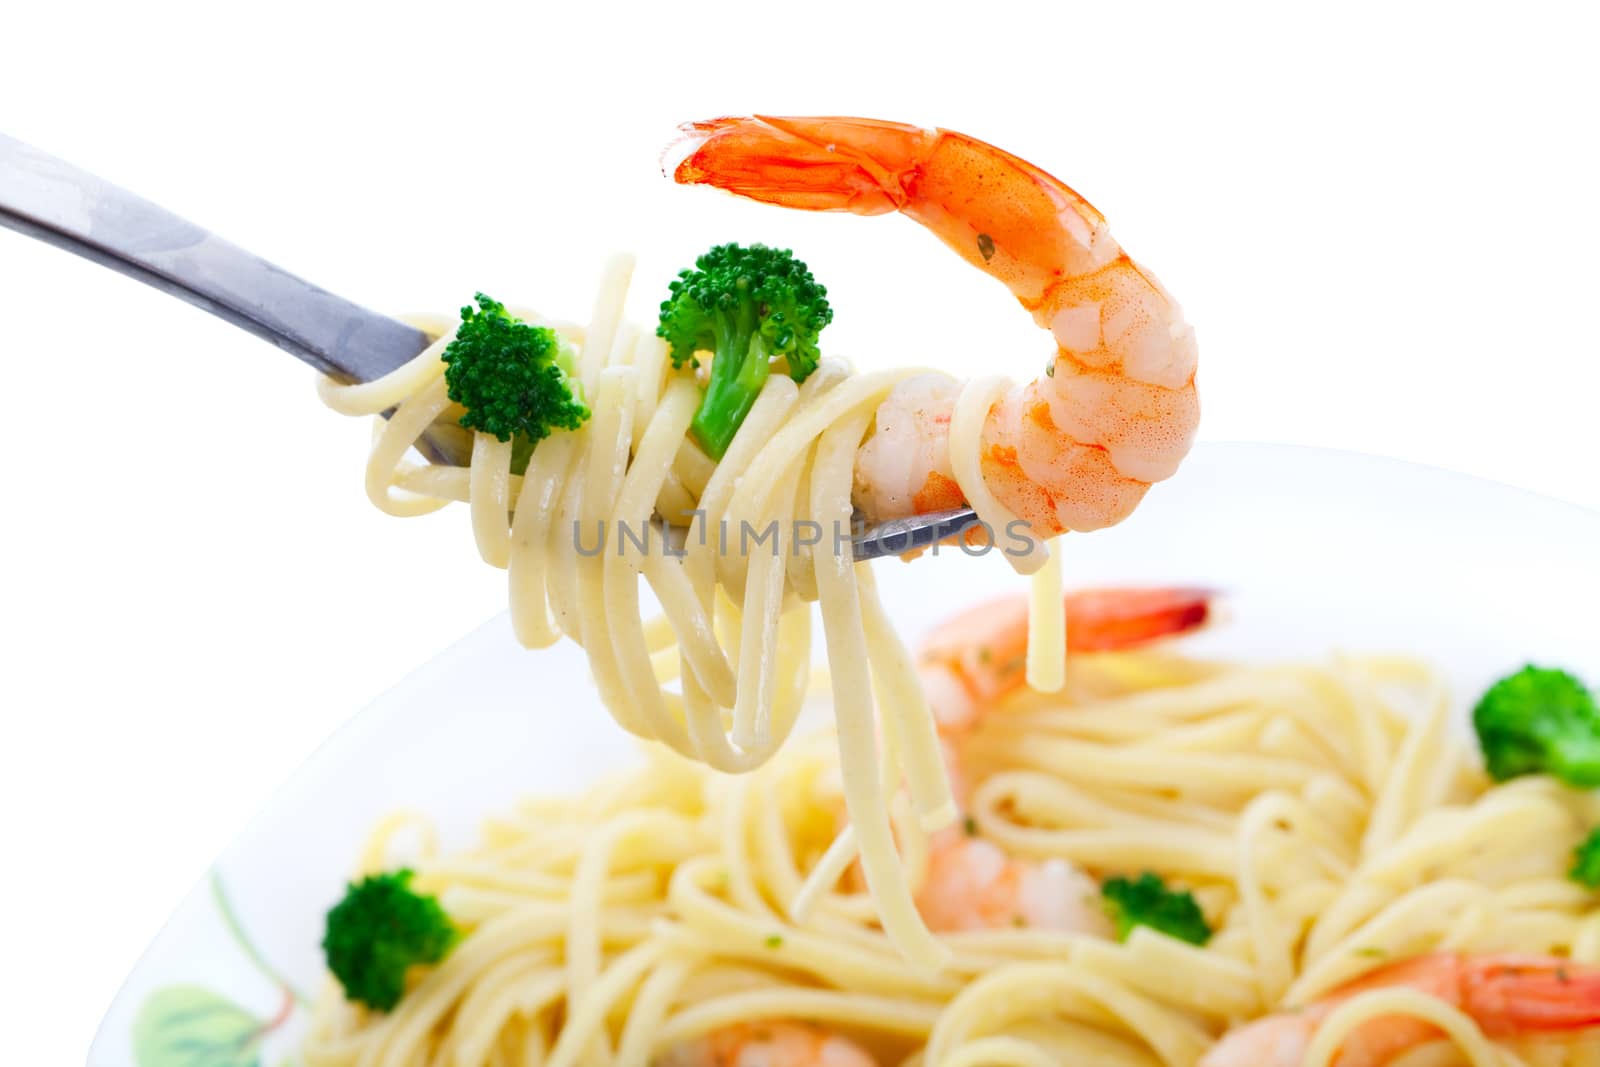 Shrimp Linguini with broccoli.  Focus on fork.  Shot on white background.